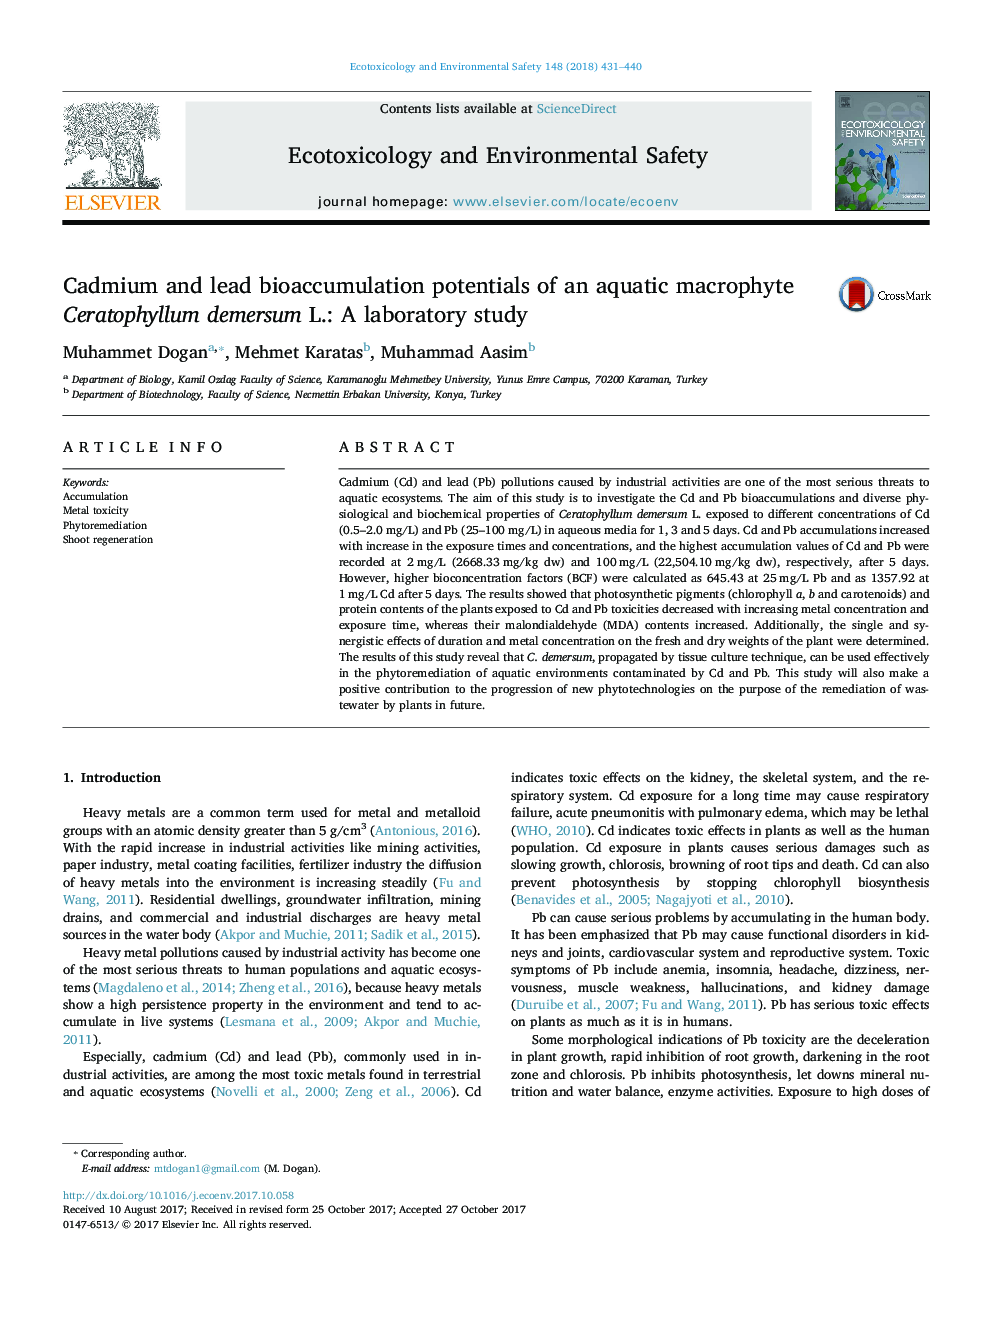 Cadmium and lead bioaccumulation potentials of an aquatic macrophyte Ceratophyllum demersum L.: A laboratory study